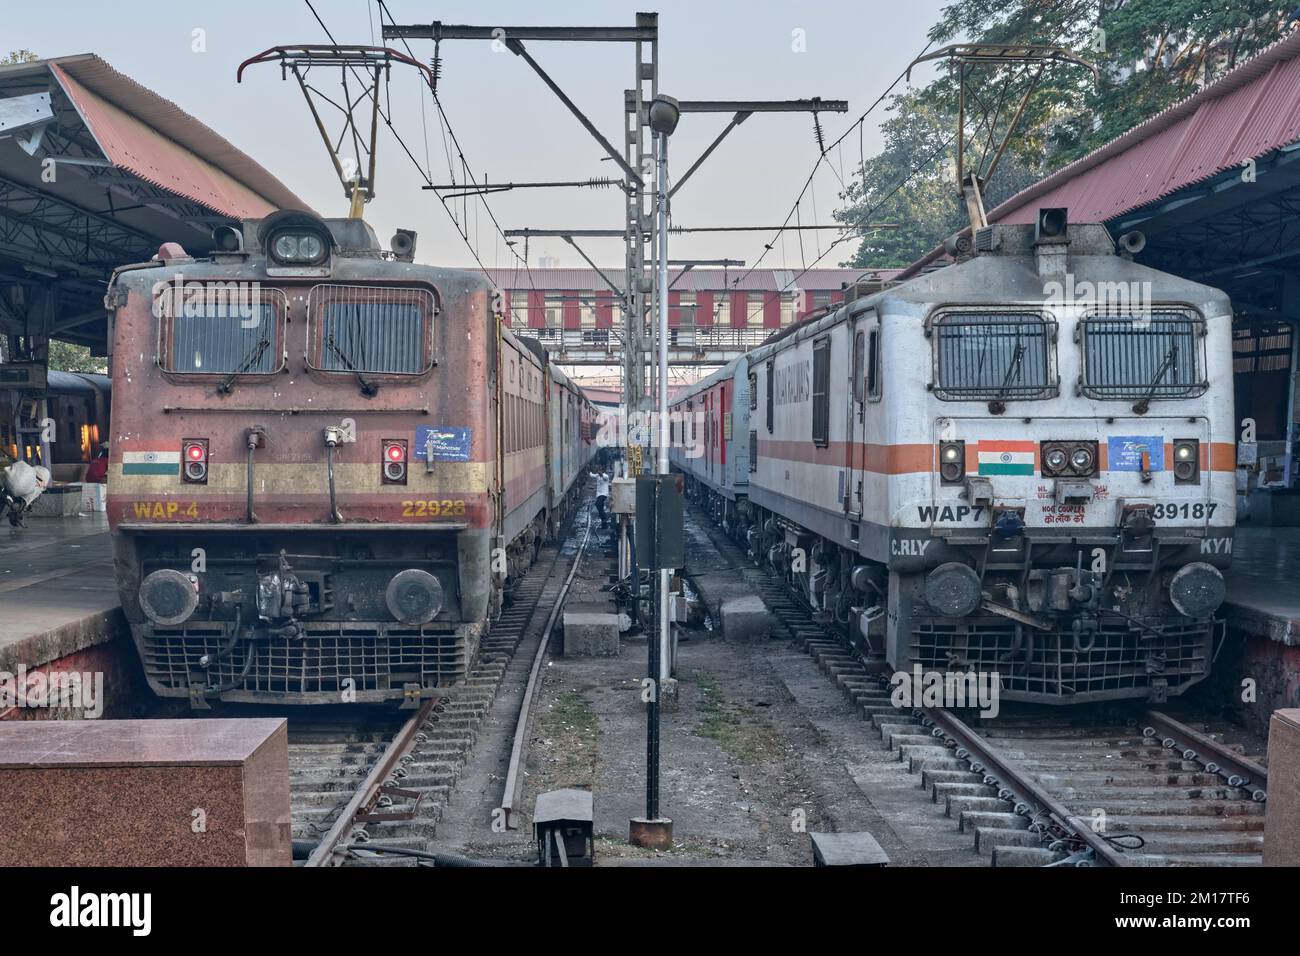 Two Indian-made diesel-electric locomotives of the WAP-4 and WAP-7 class at Chhatrapati Shivaji Maharaj Terminus (CSMT) in Mumbai, India Stock Photo